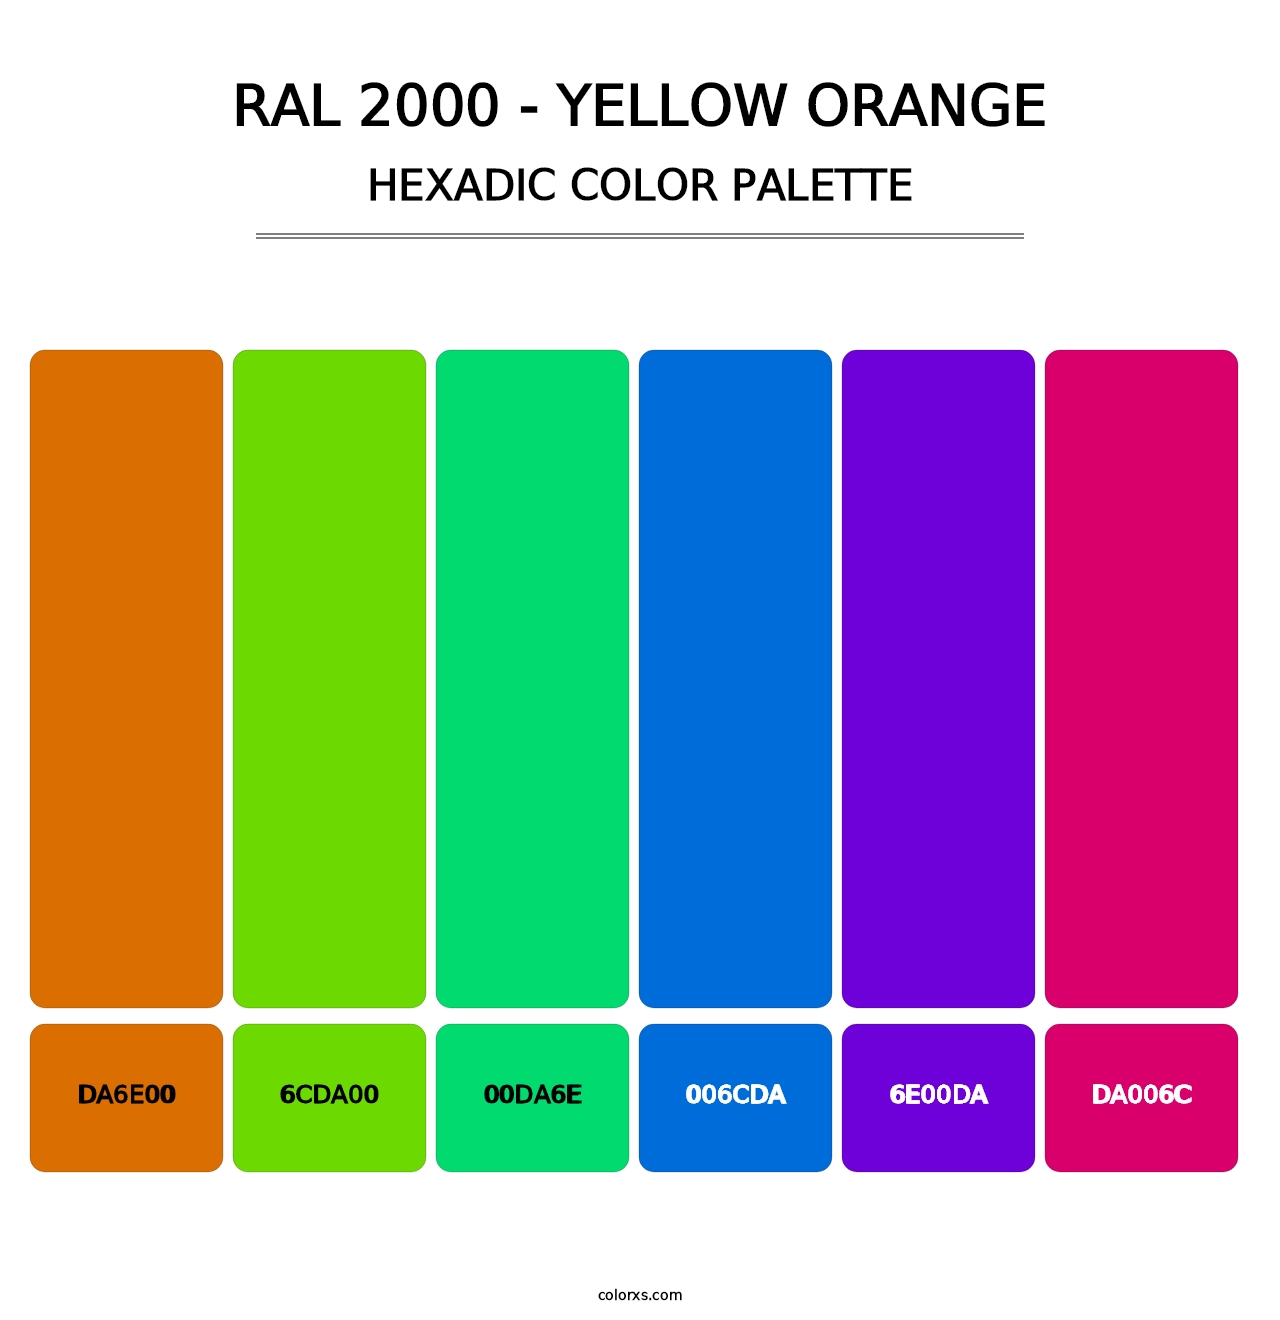 RAL 2000 - Yellow Orange - Hexadic Color Palette